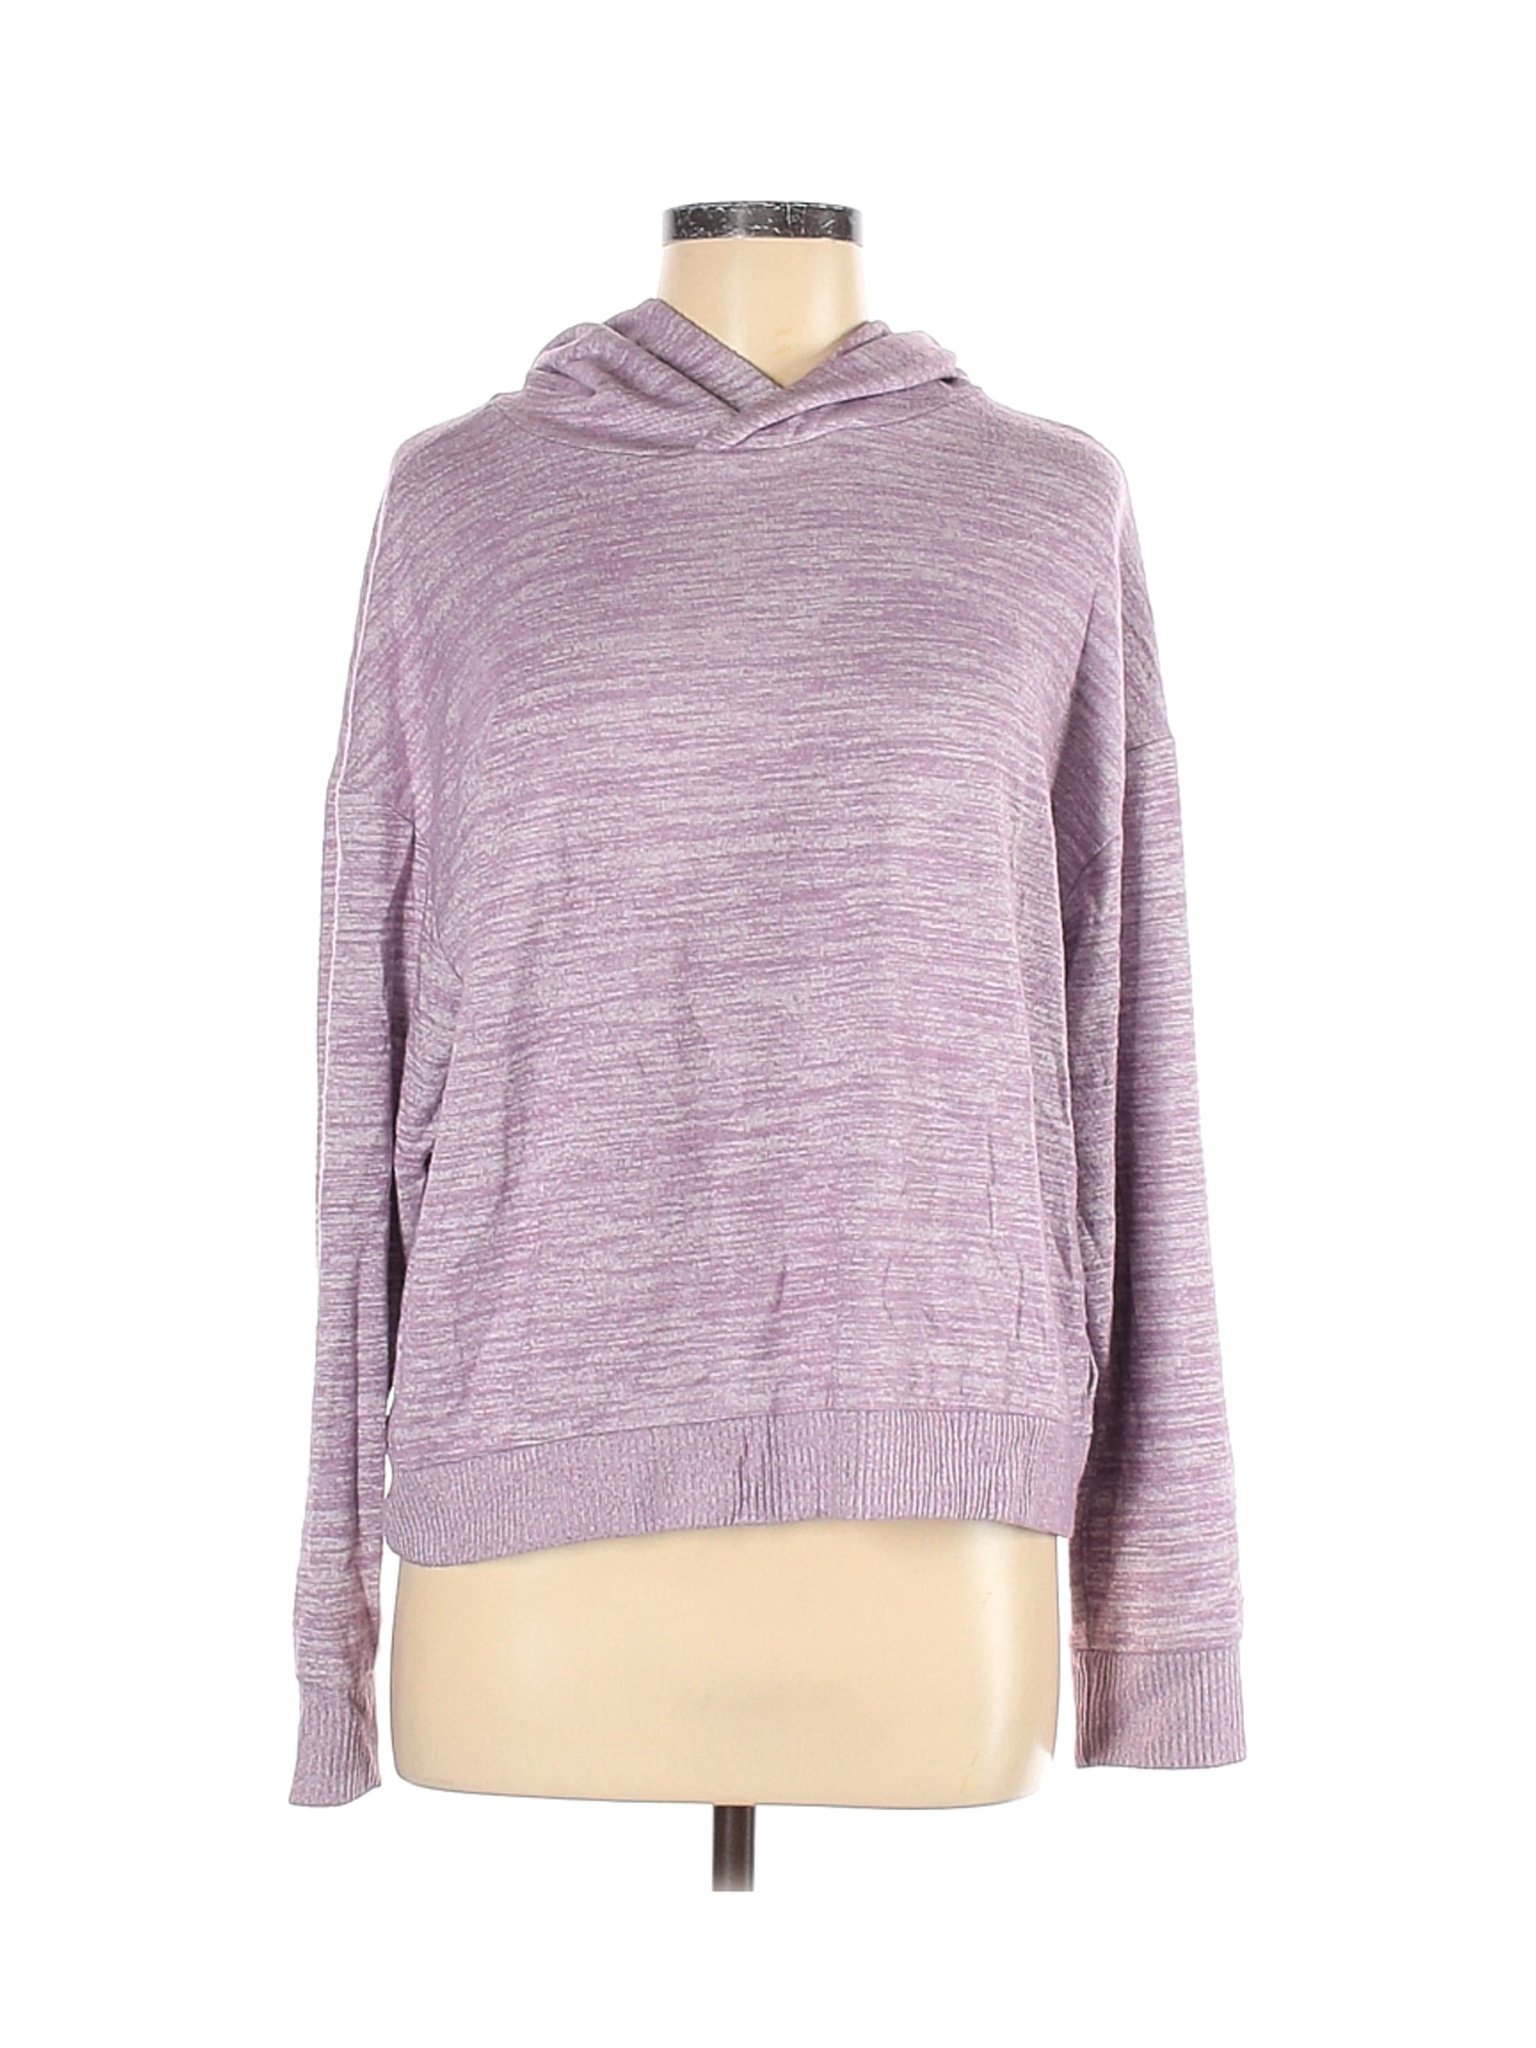 Gap Women Purple Pullover Hoodie M | eBay